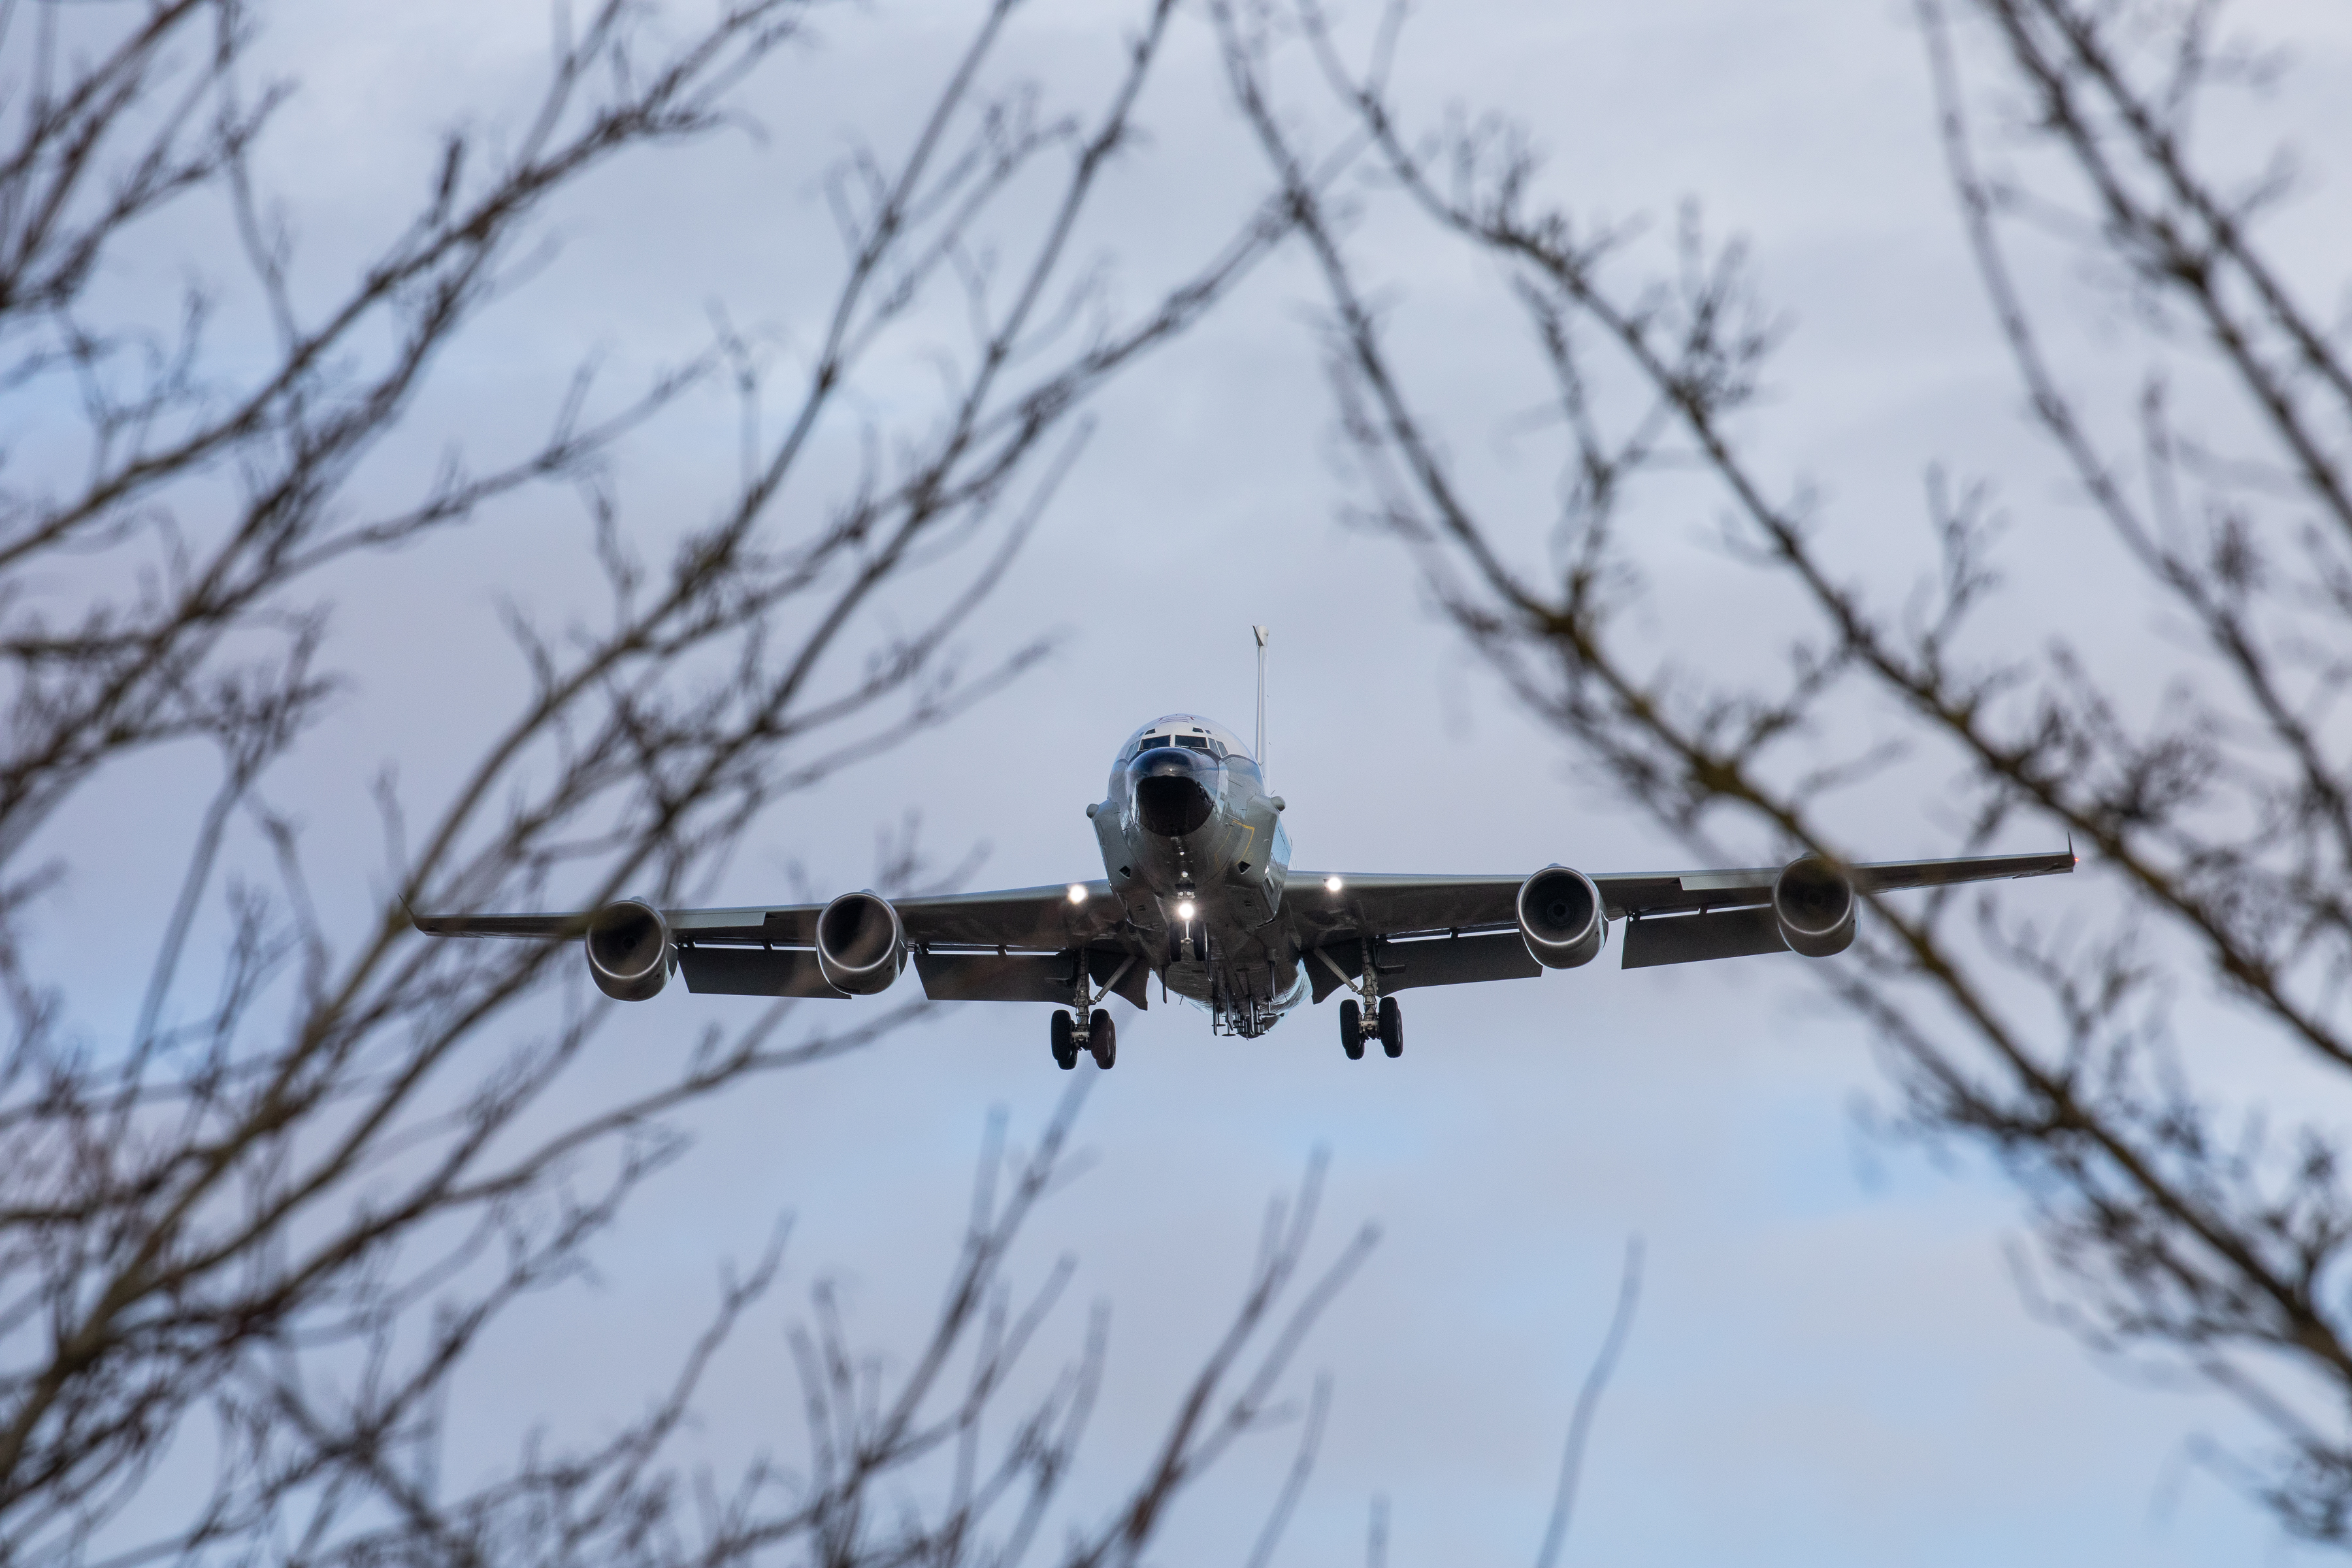 RC-135W Rivet Joint in flight through tree twigs.